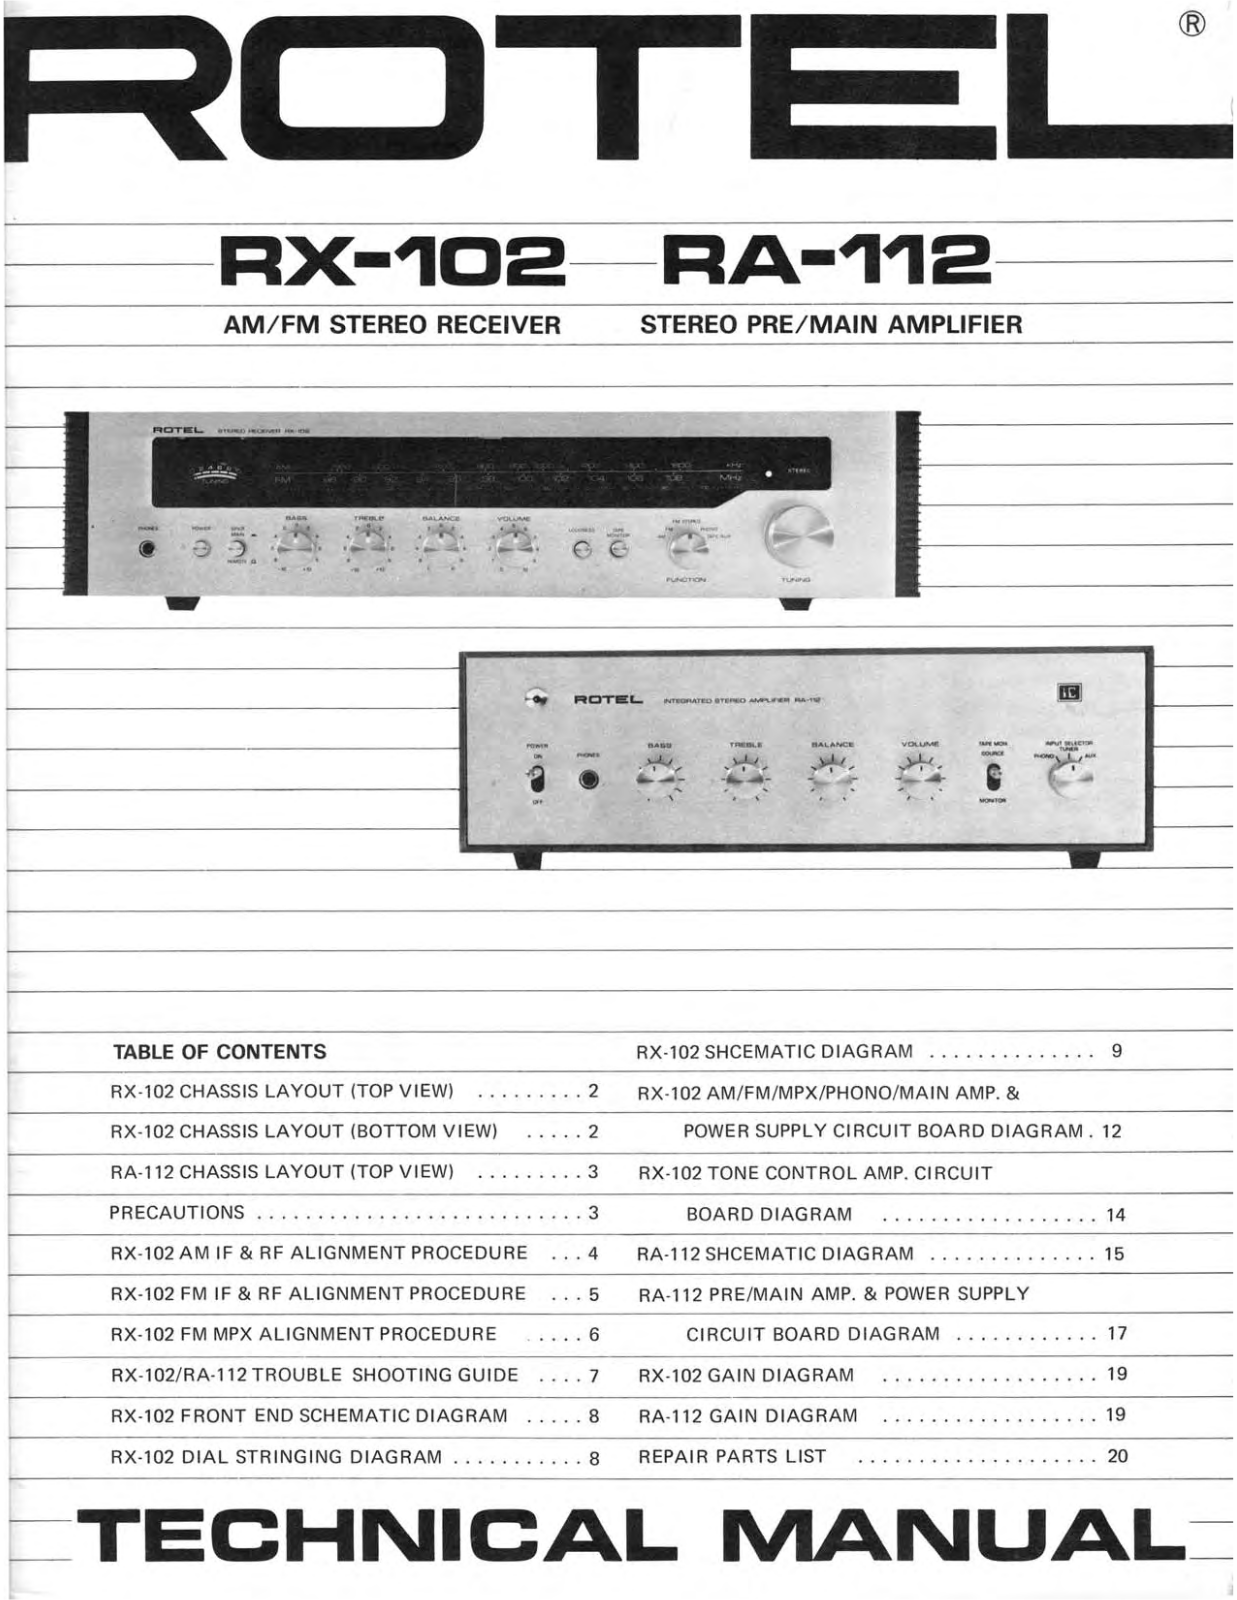 Rotel RX-102, RA-112 Service manual